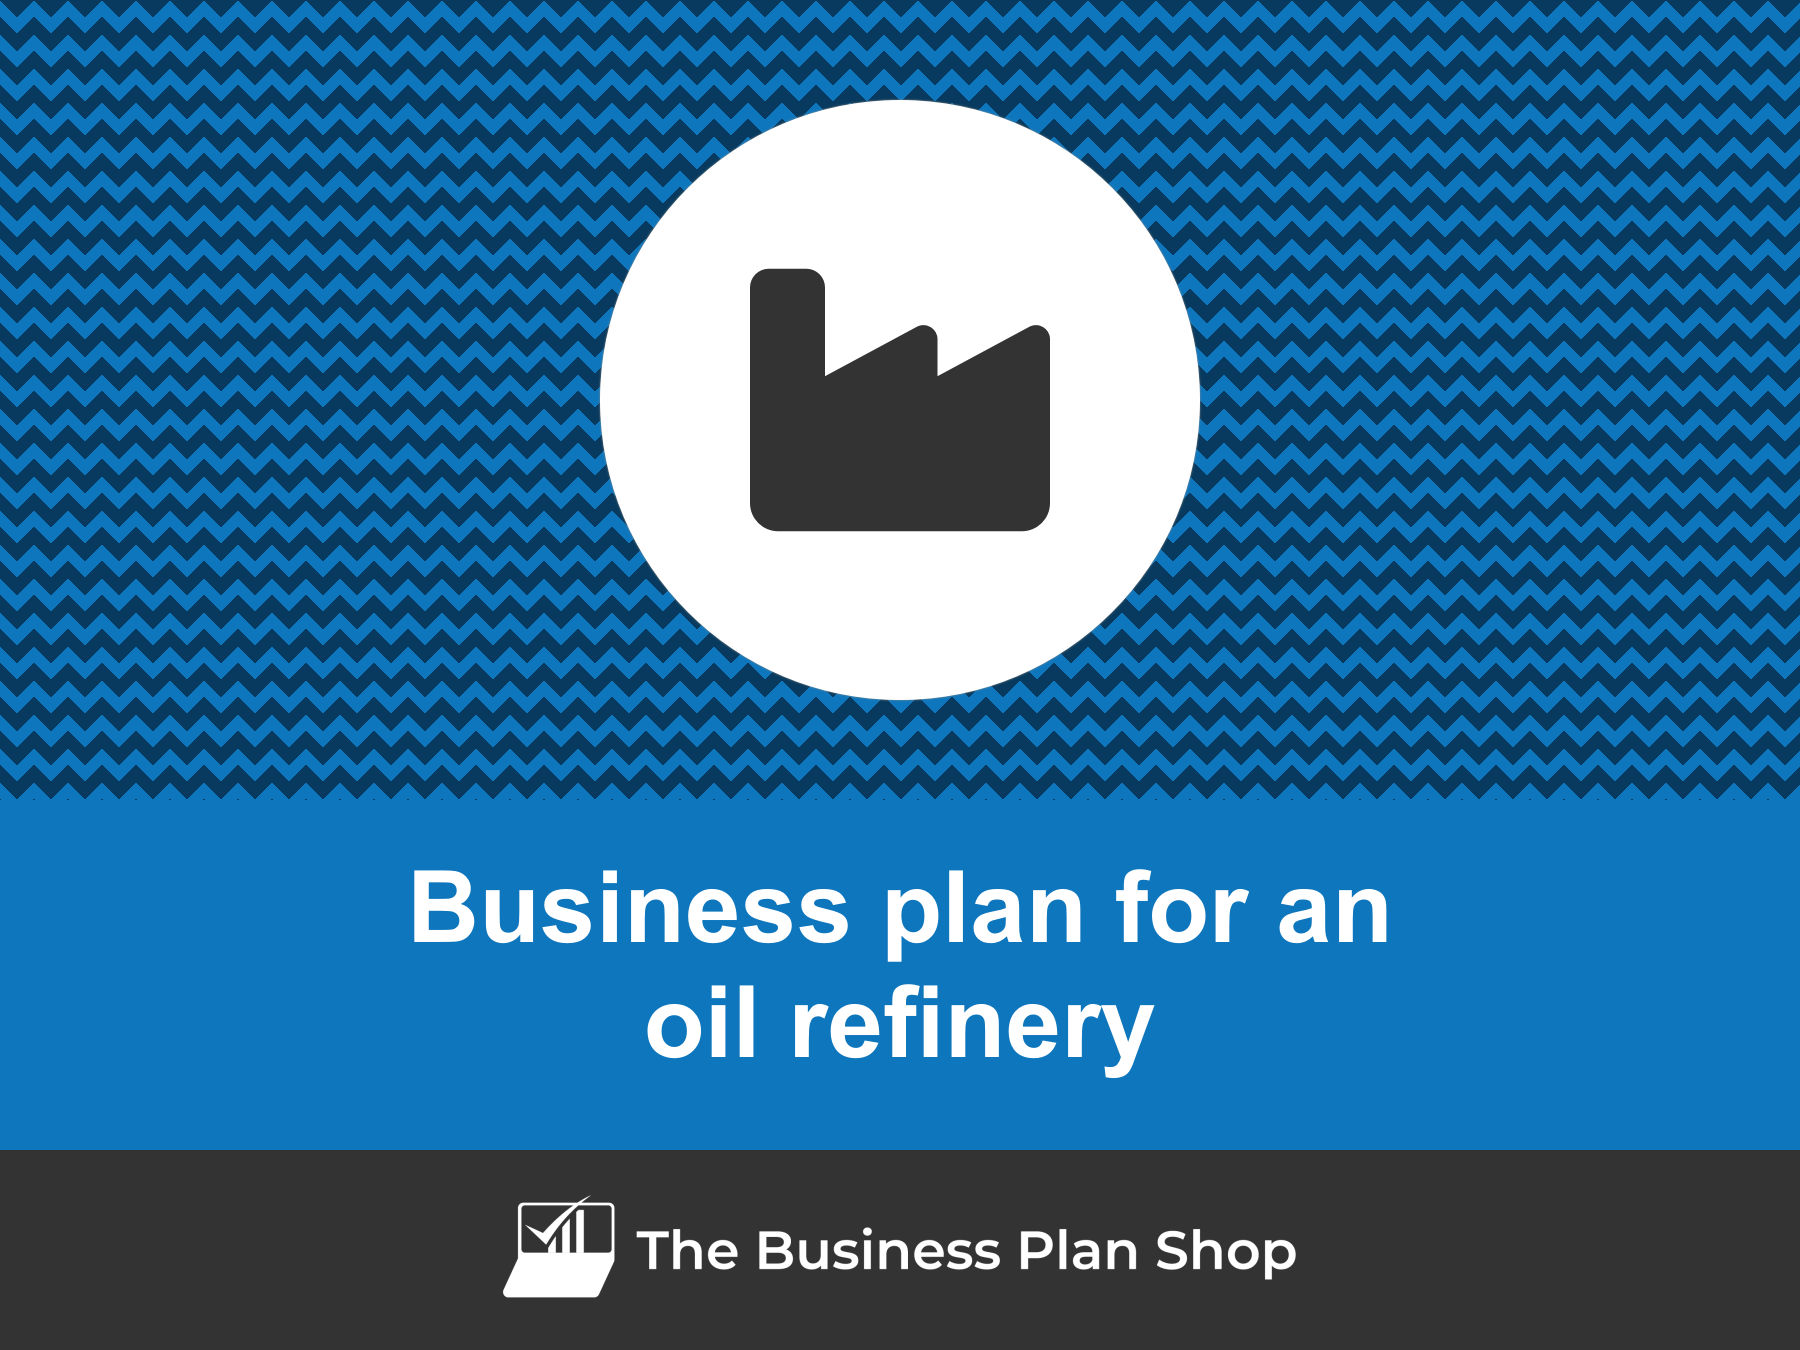 crude oil refinery business plan pdf